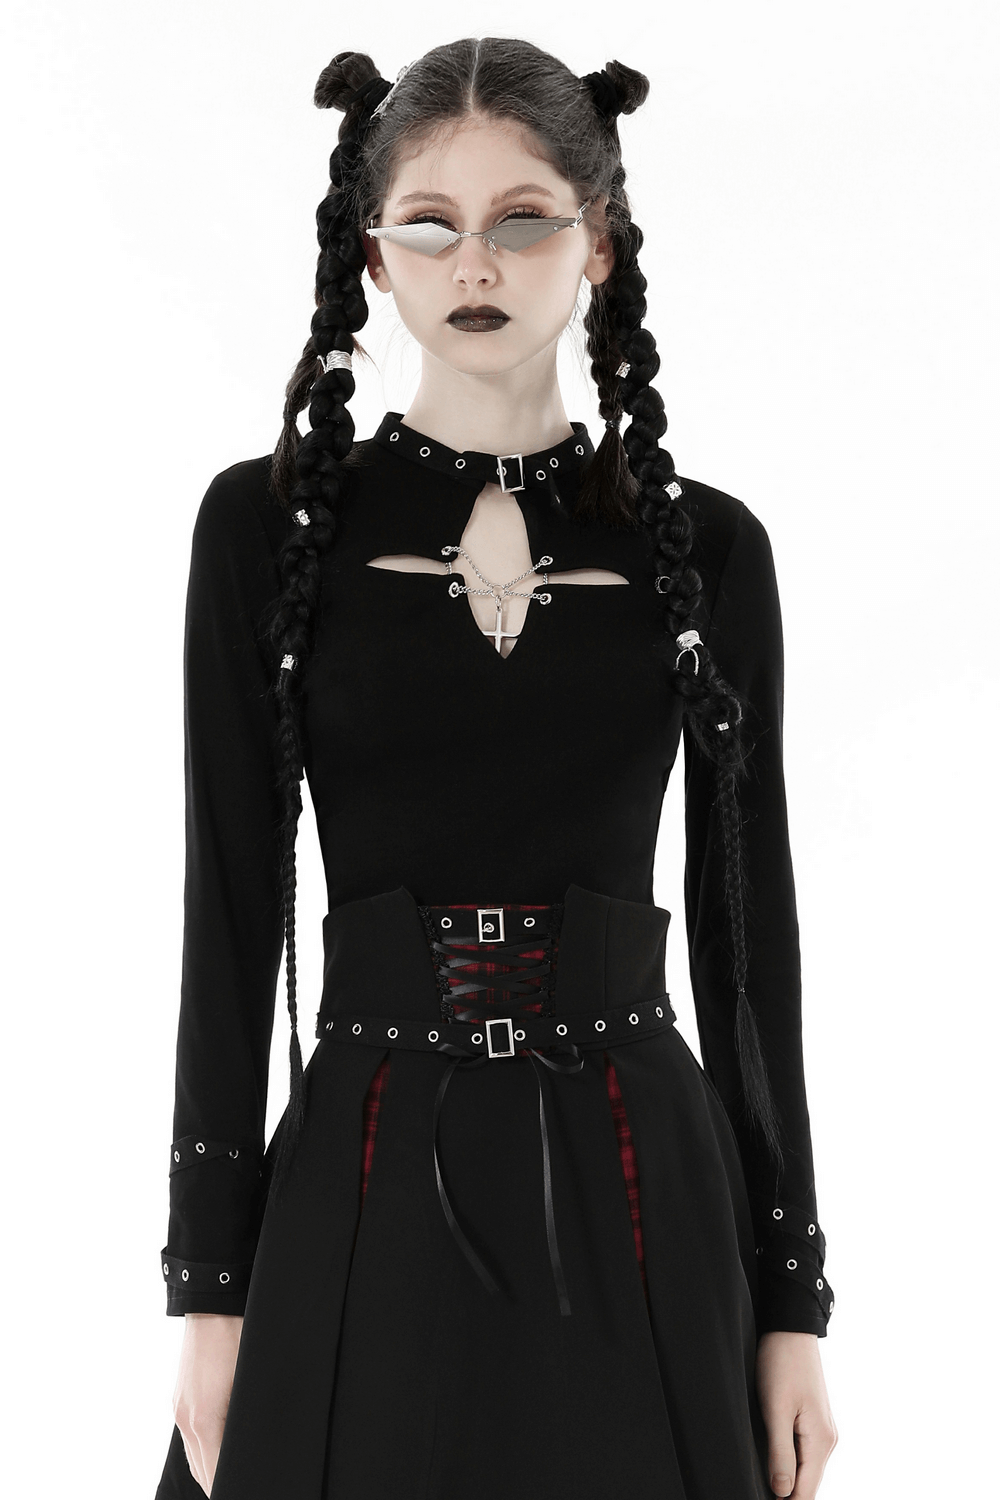 Dark Gothic Punk Women's Cutout Cross Crop Top